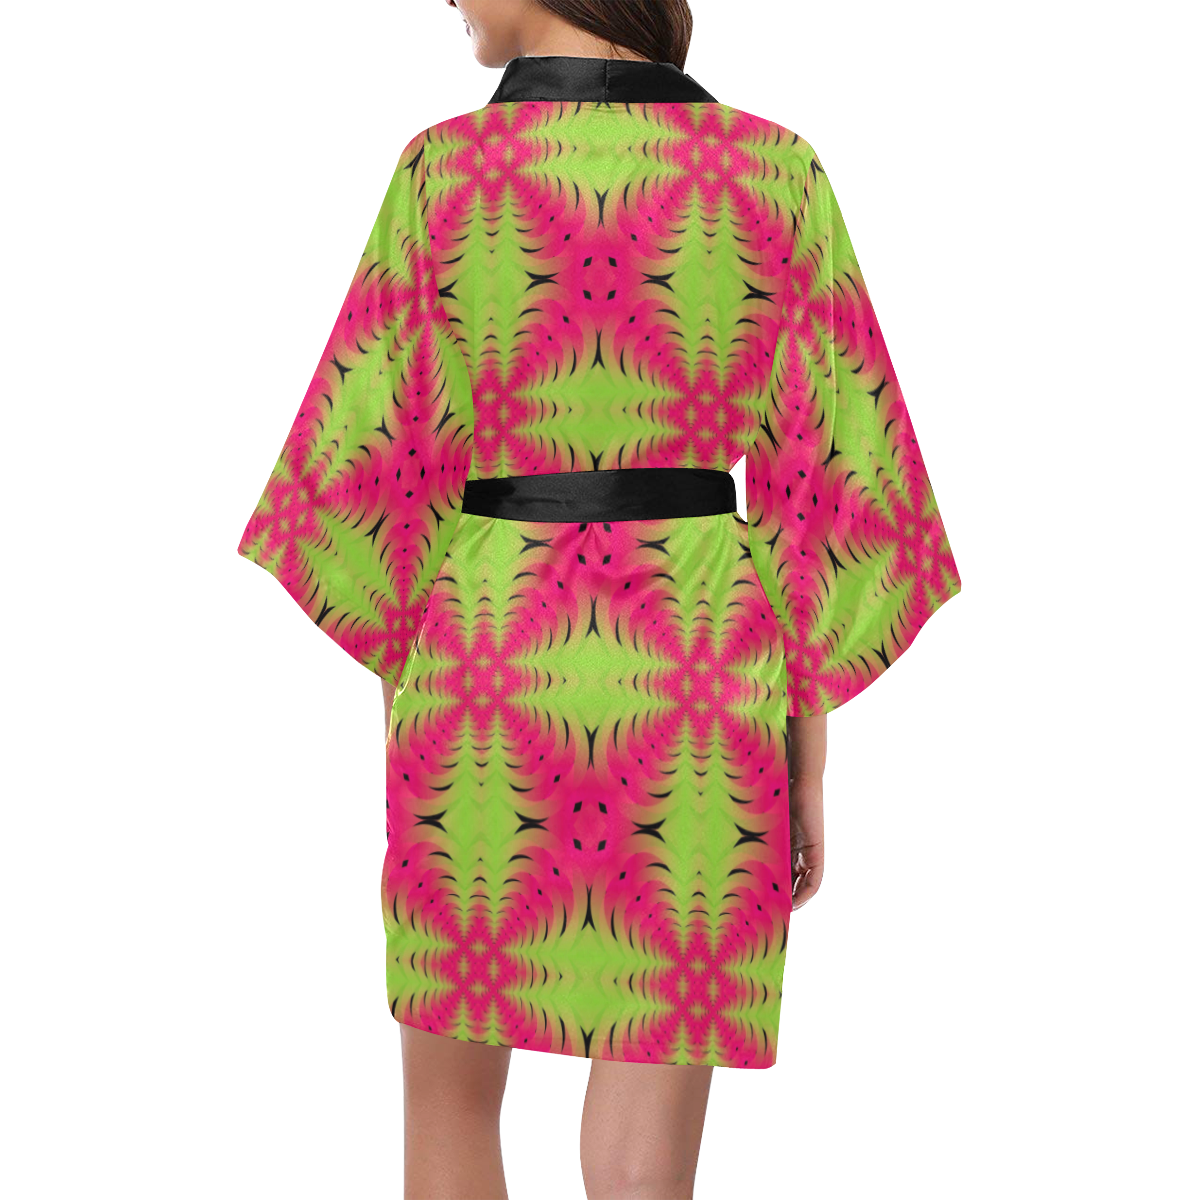 Watermelon Kimono Robe